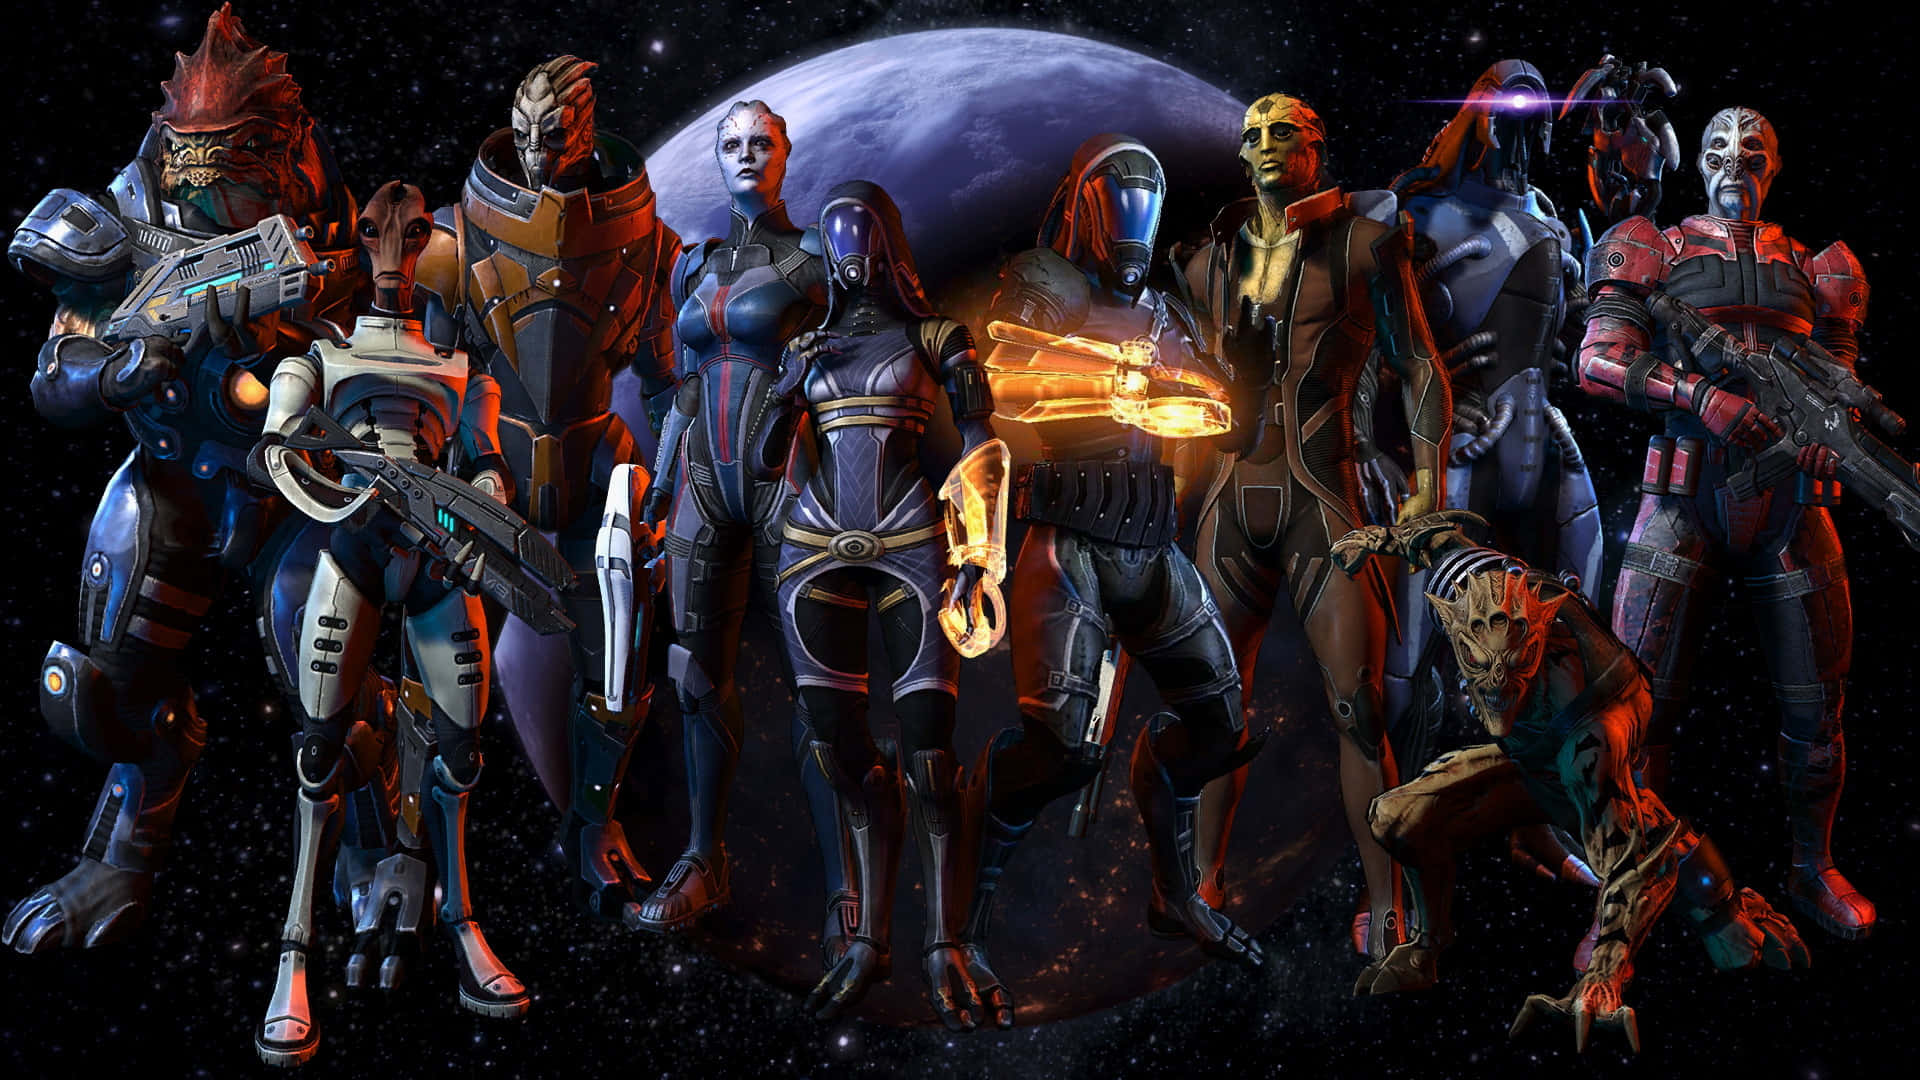 Mass Effect Characters Assembling for Action Wallpaper